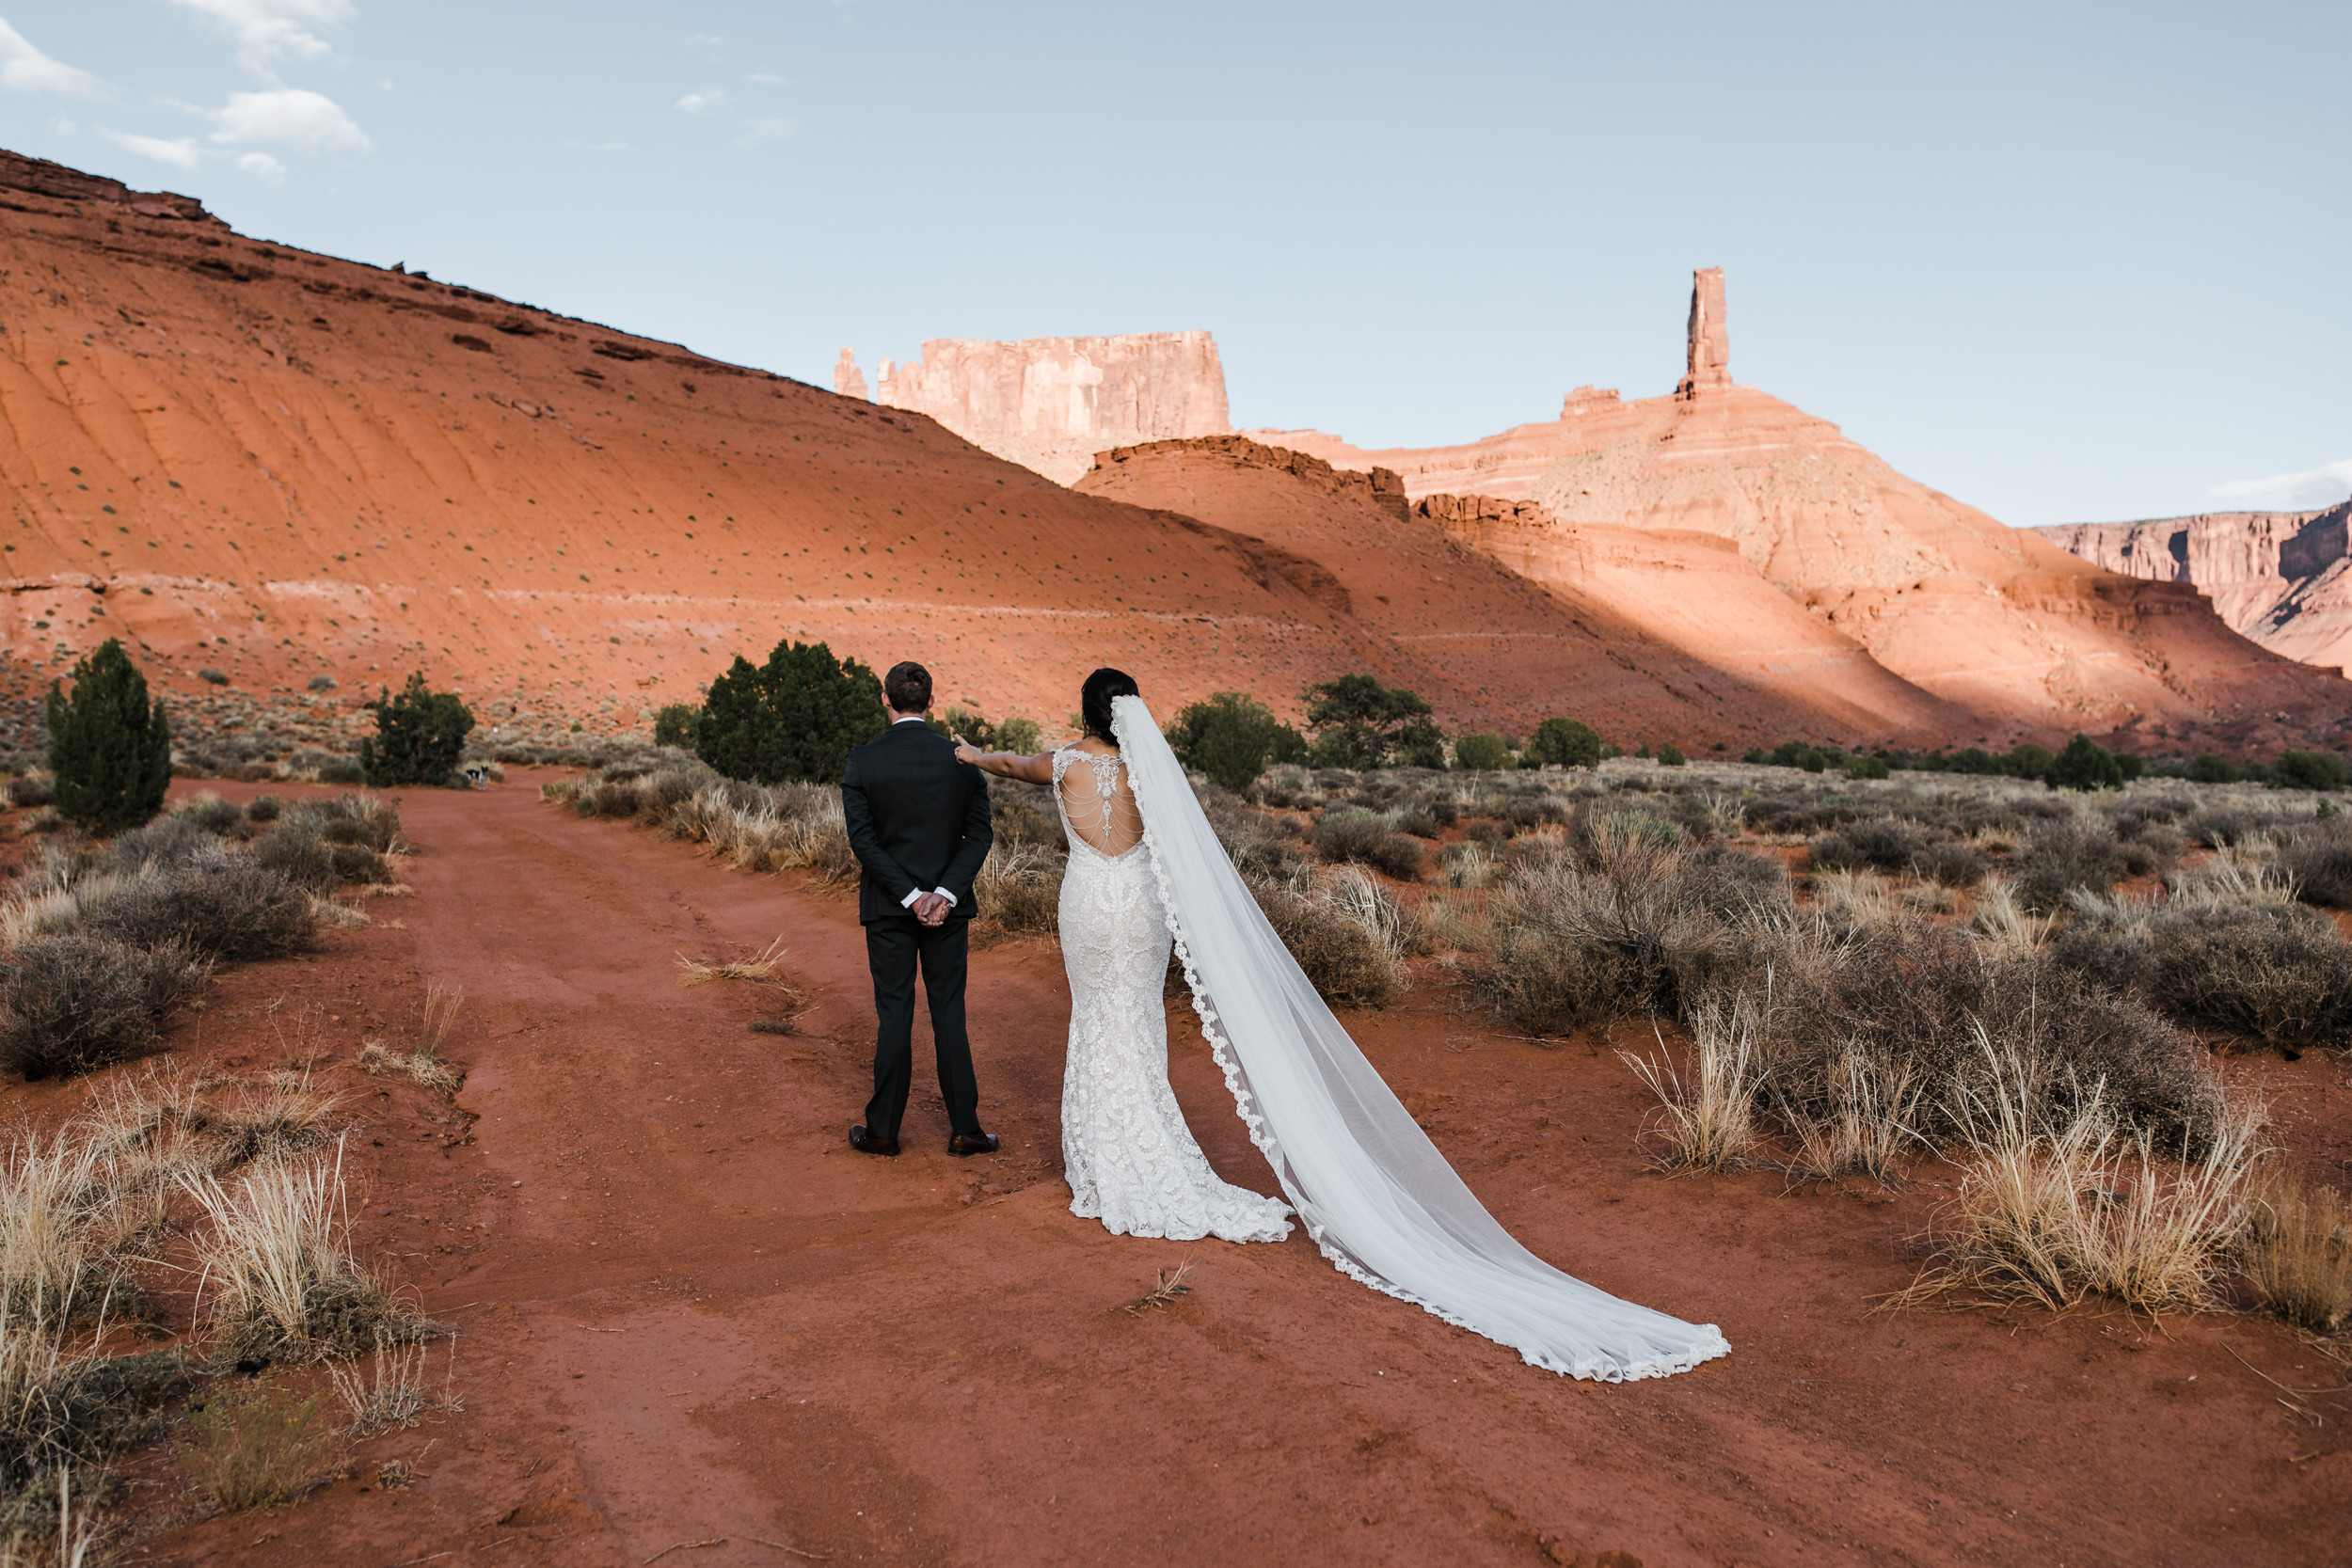 moab, utah wedding photo session | galia lahav bride | bridals in the desert | the hearnes adventure photography